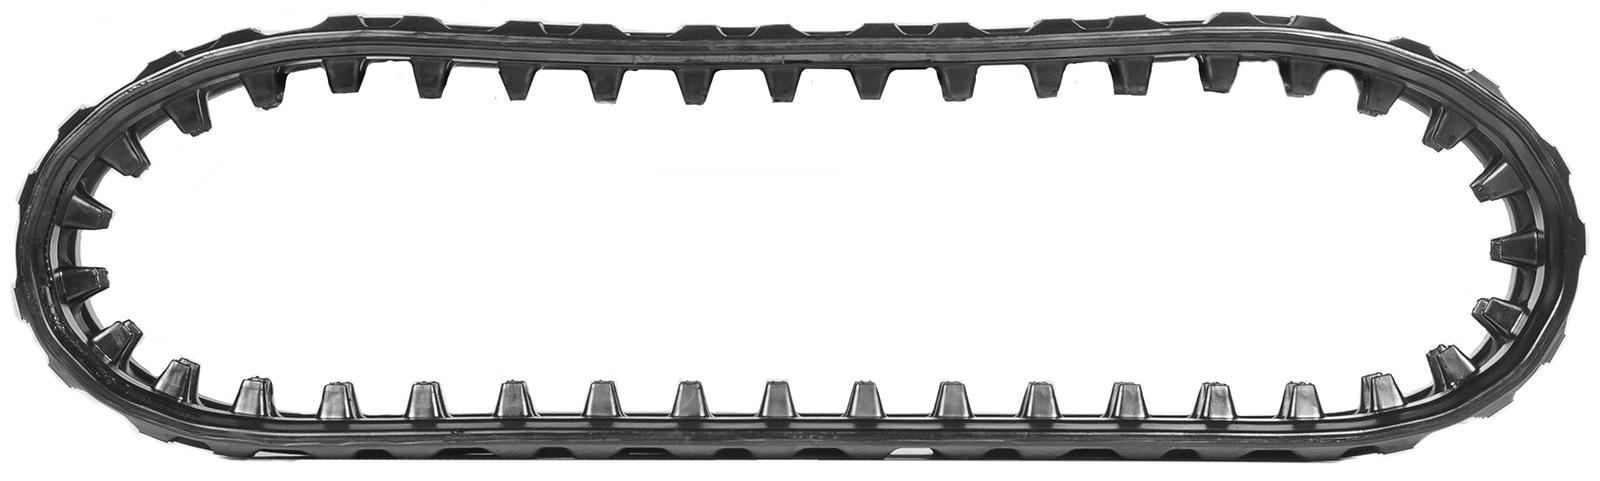 set of 2 7" heavy duty rubber track (180x72x32)